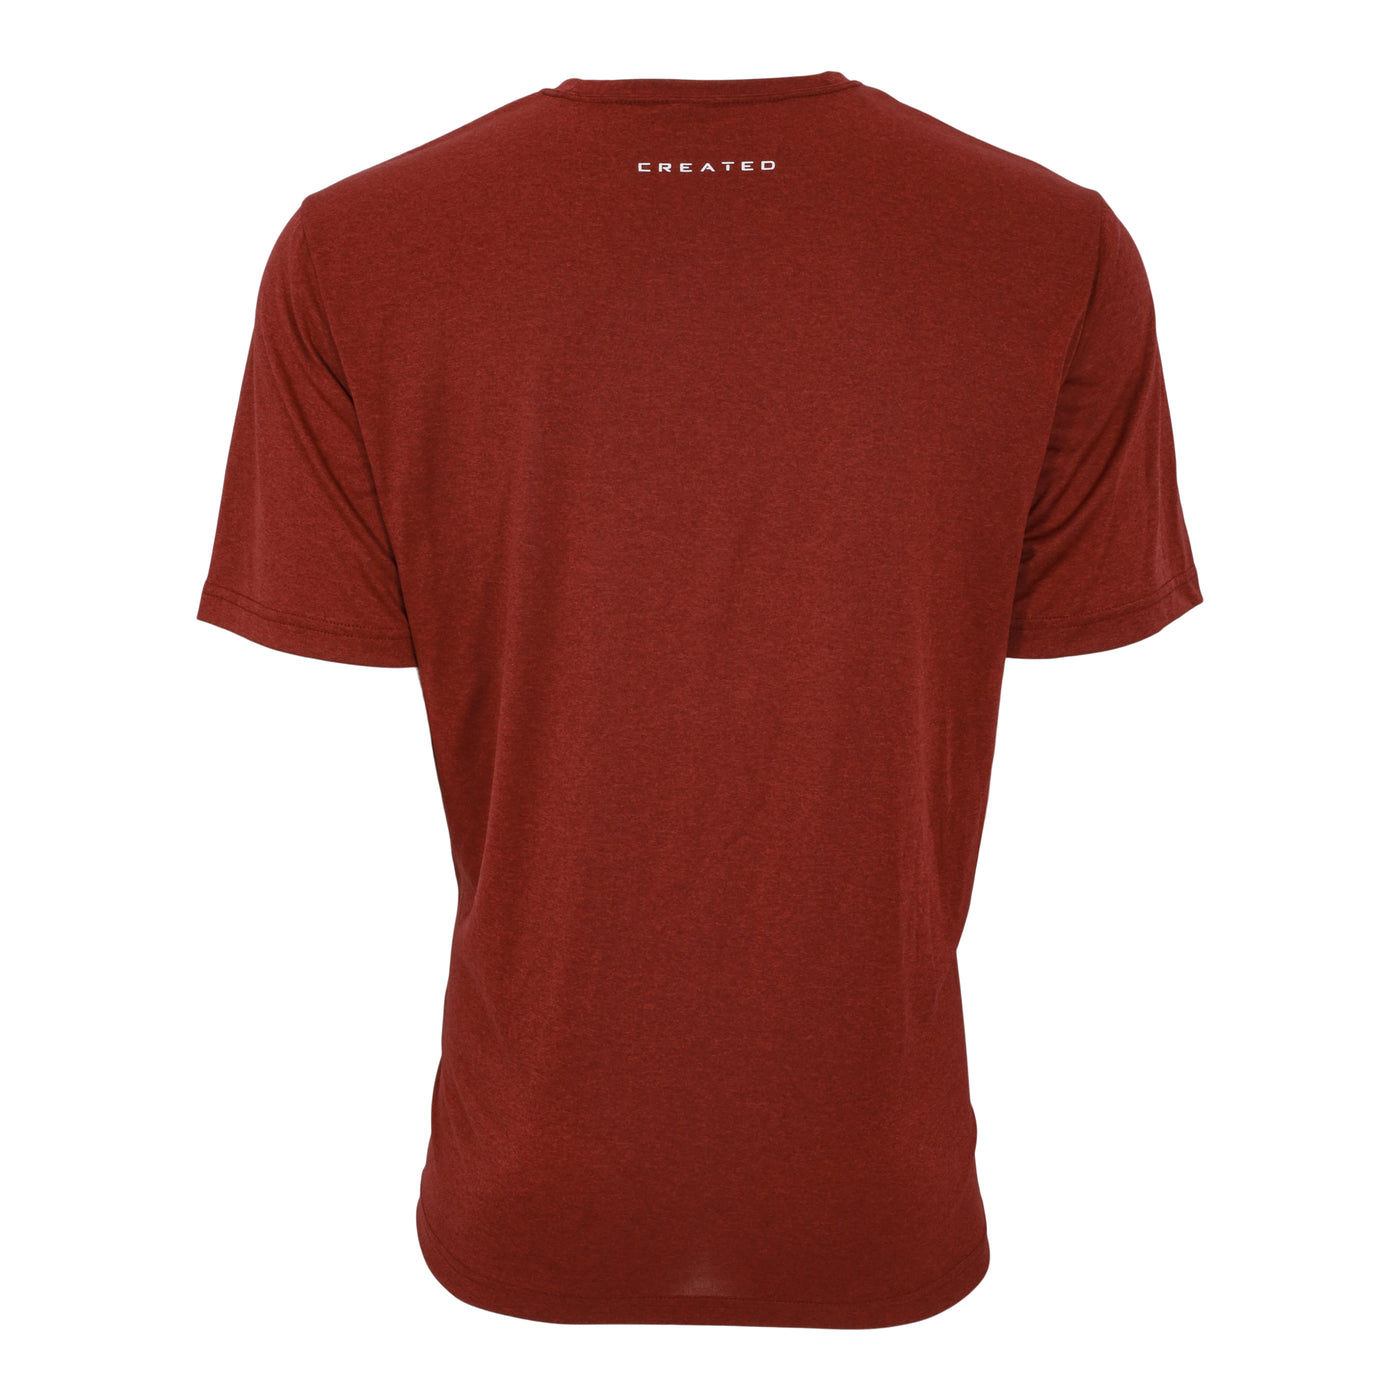 Created Men's Performance maroon short sleeve t-shirt rear view